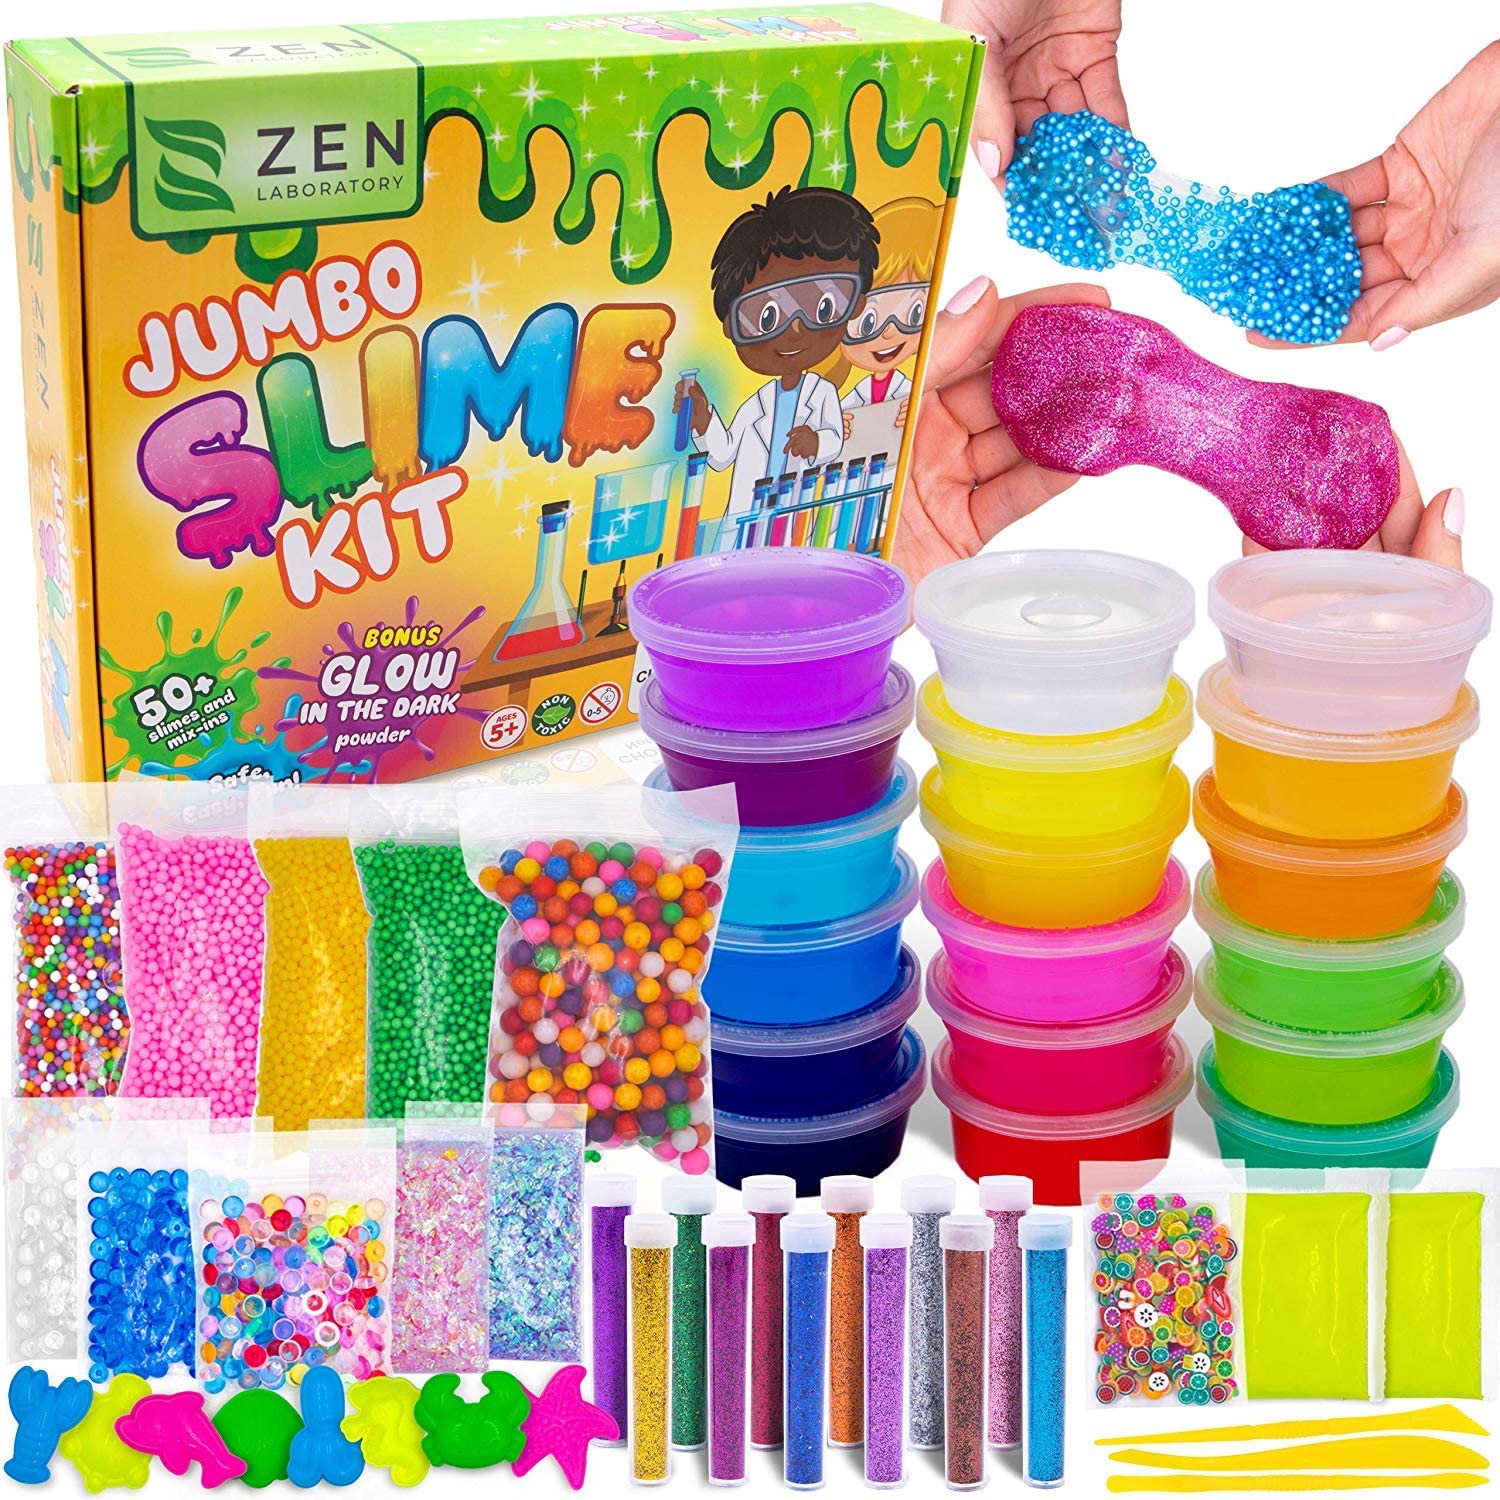 Zen Laboratory DIY Slime Kit Girls’ Toy, Age 7